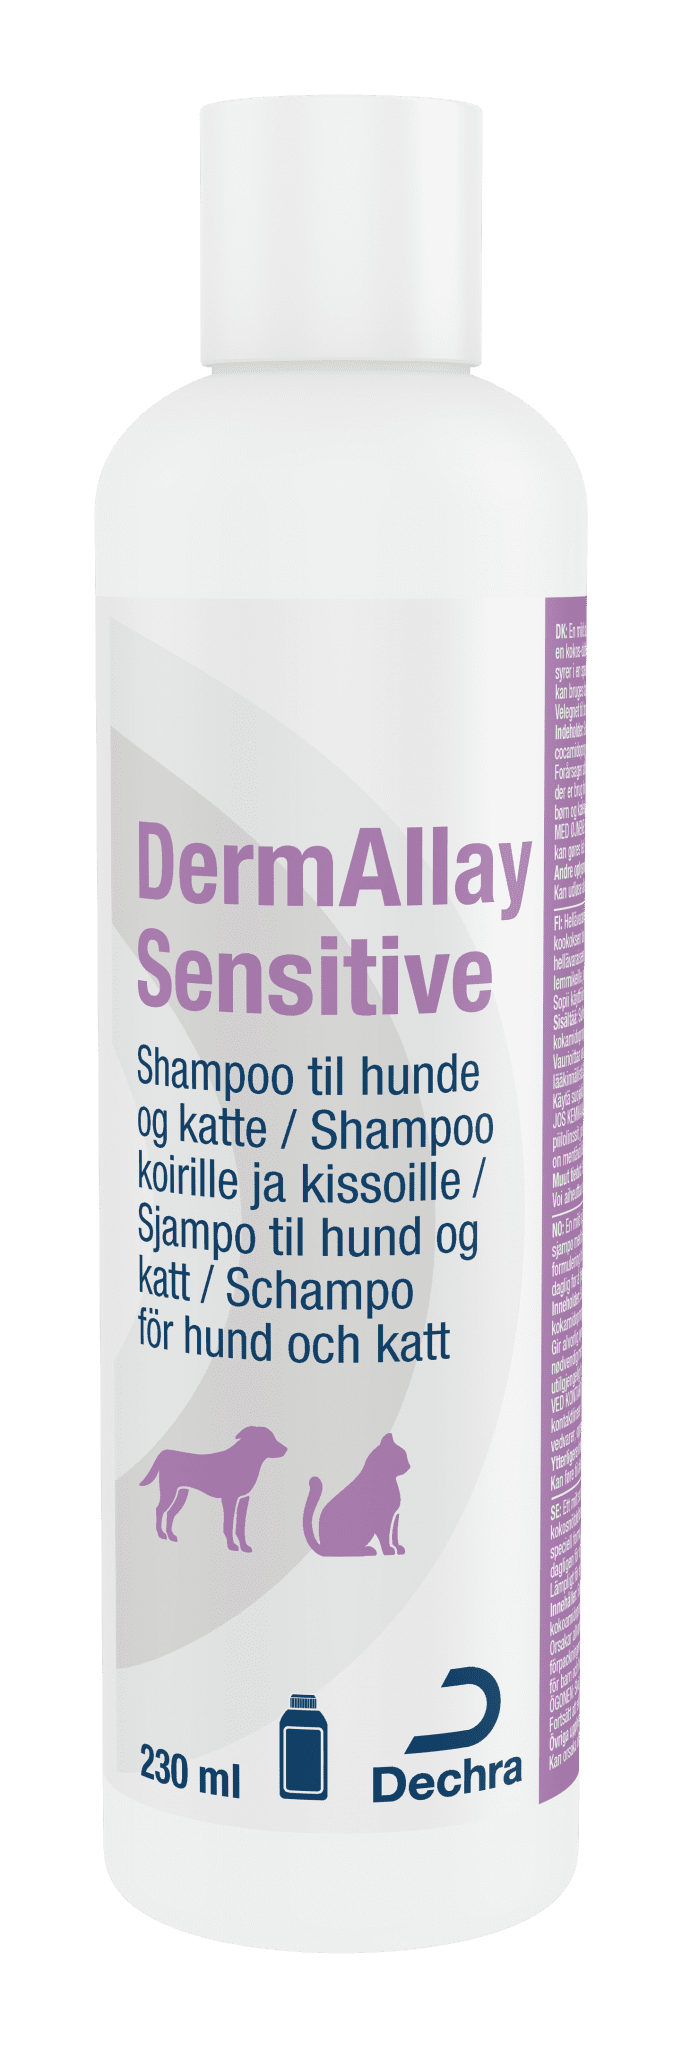 DermAllay Sensitive Shampoo 230ml